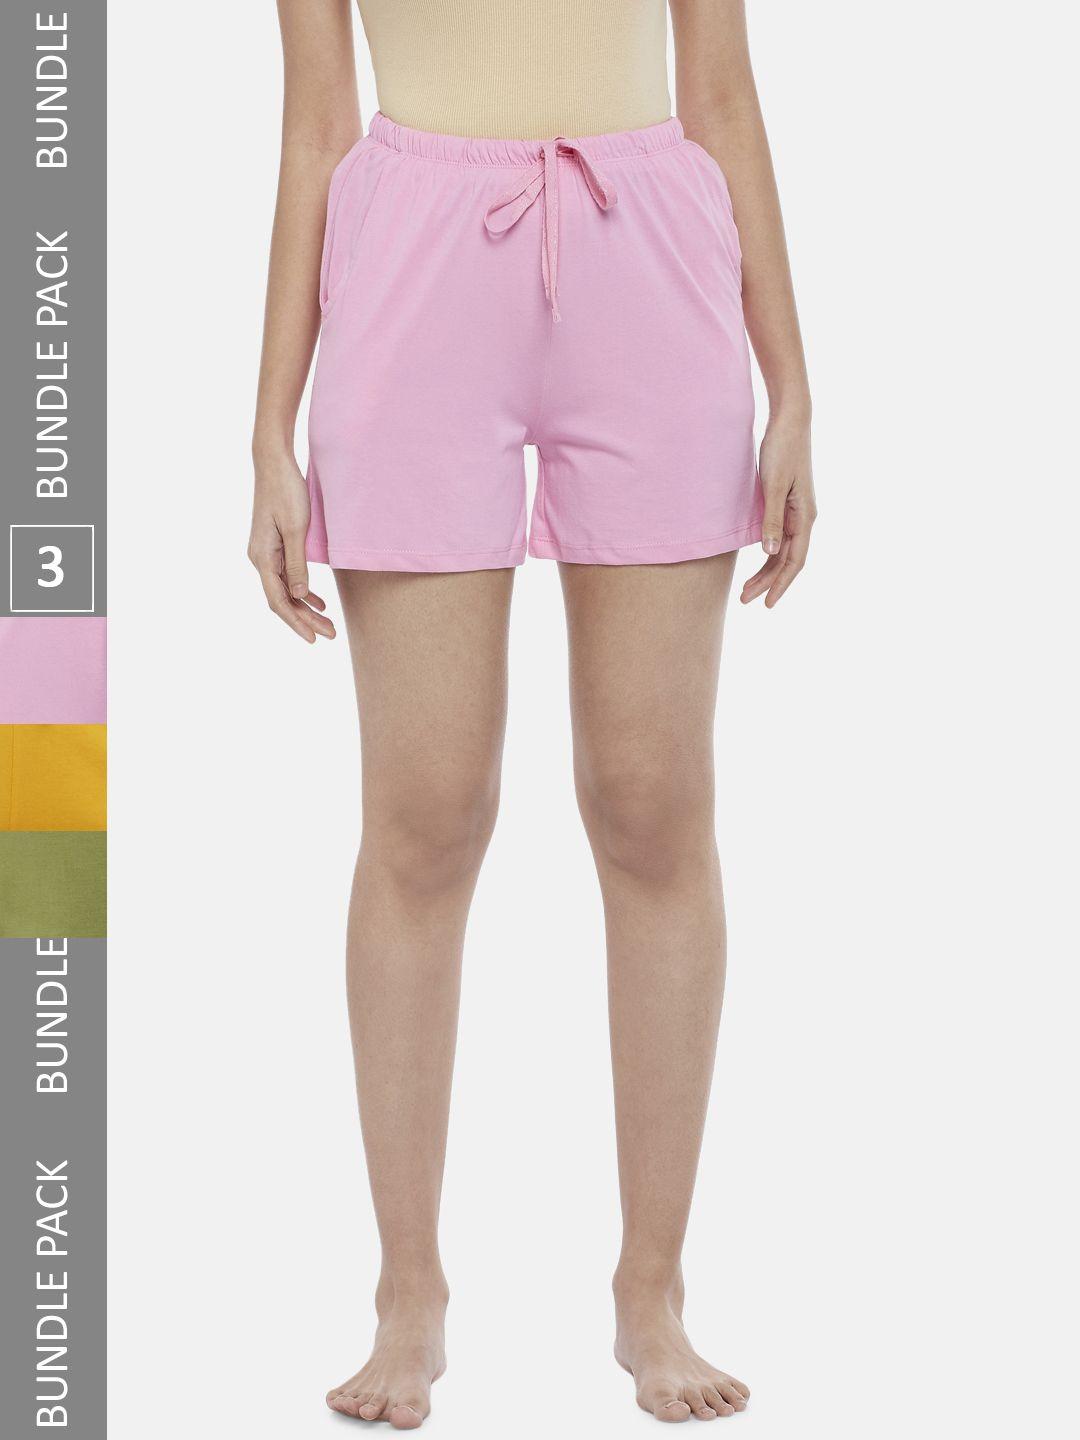 dreamz-by-pantaloons-women-green-&-pink-3-lounge-shorts